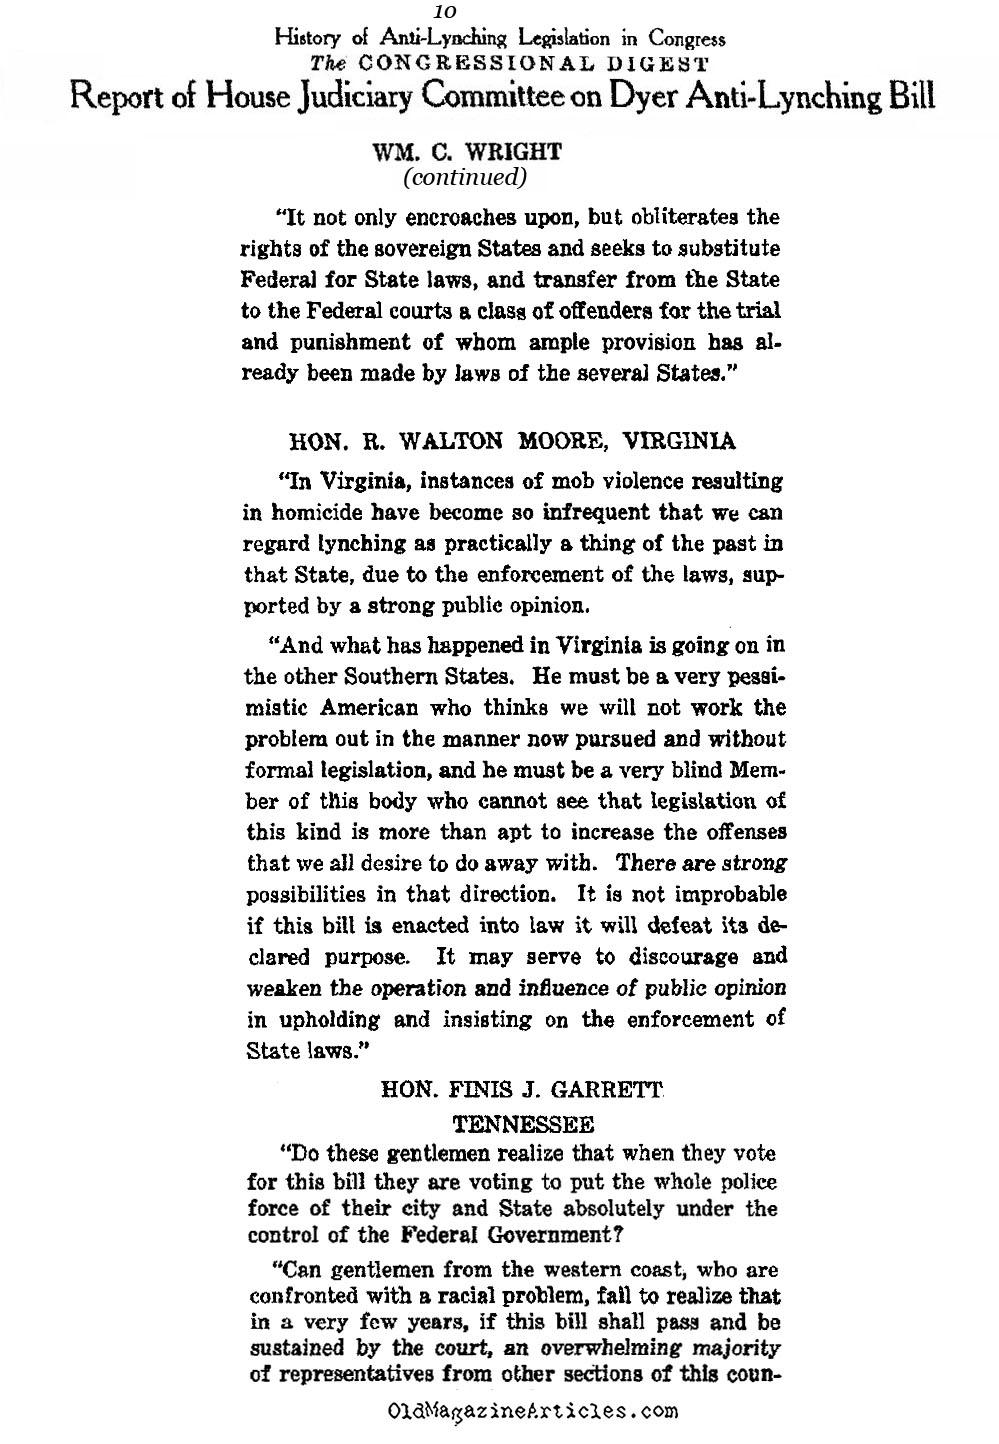 Anti-Lynching Law Debated in Congress (Congressional Digest, 1922)